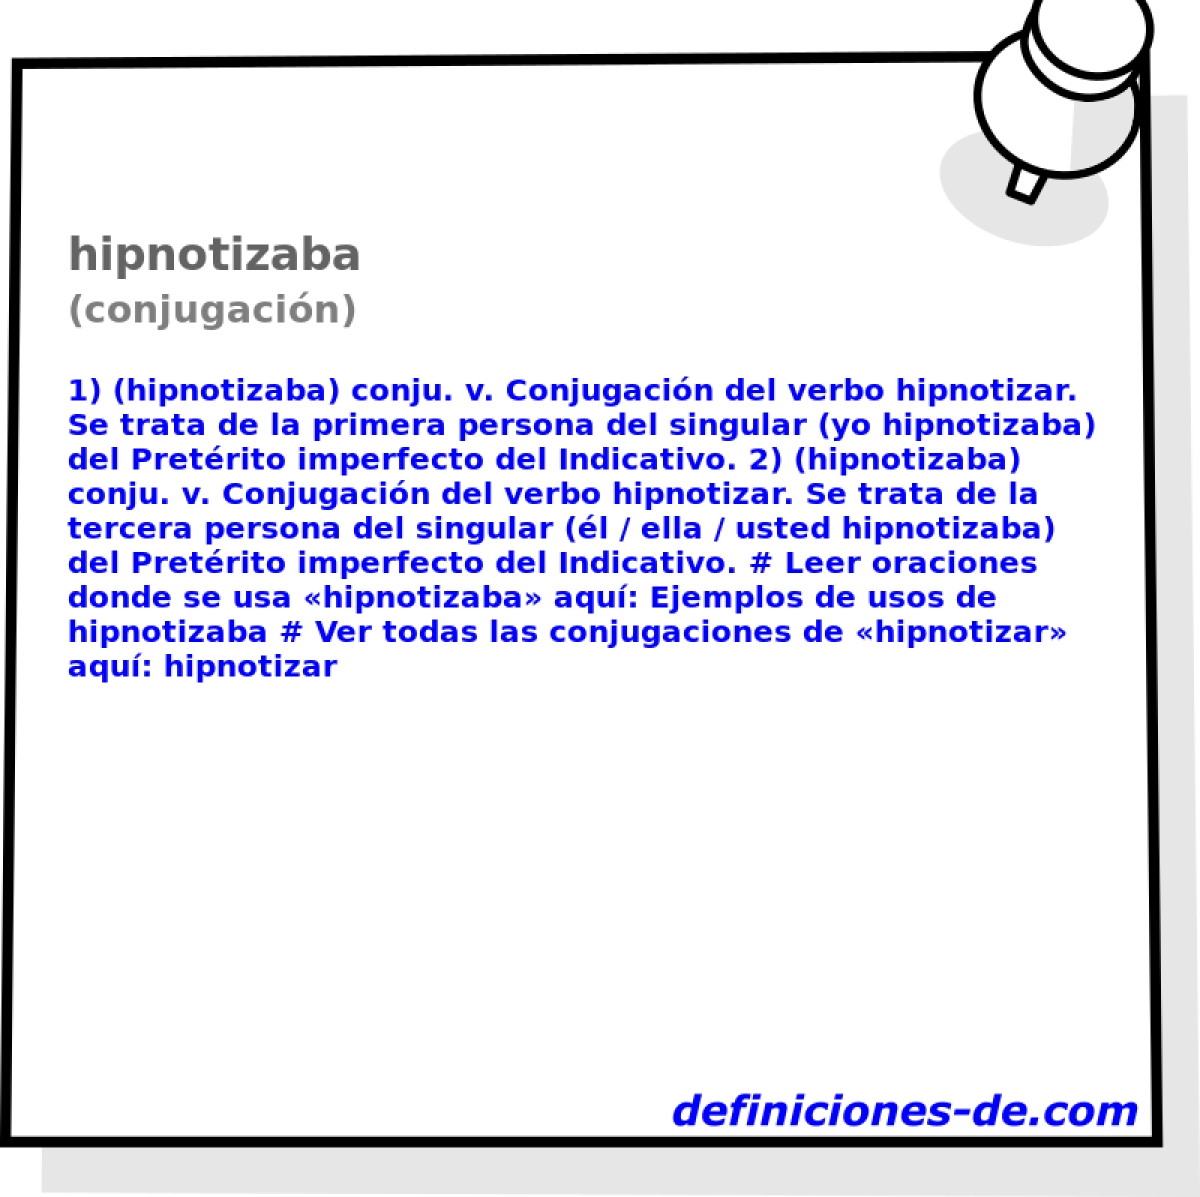 hipnotizaba (conjugacin)